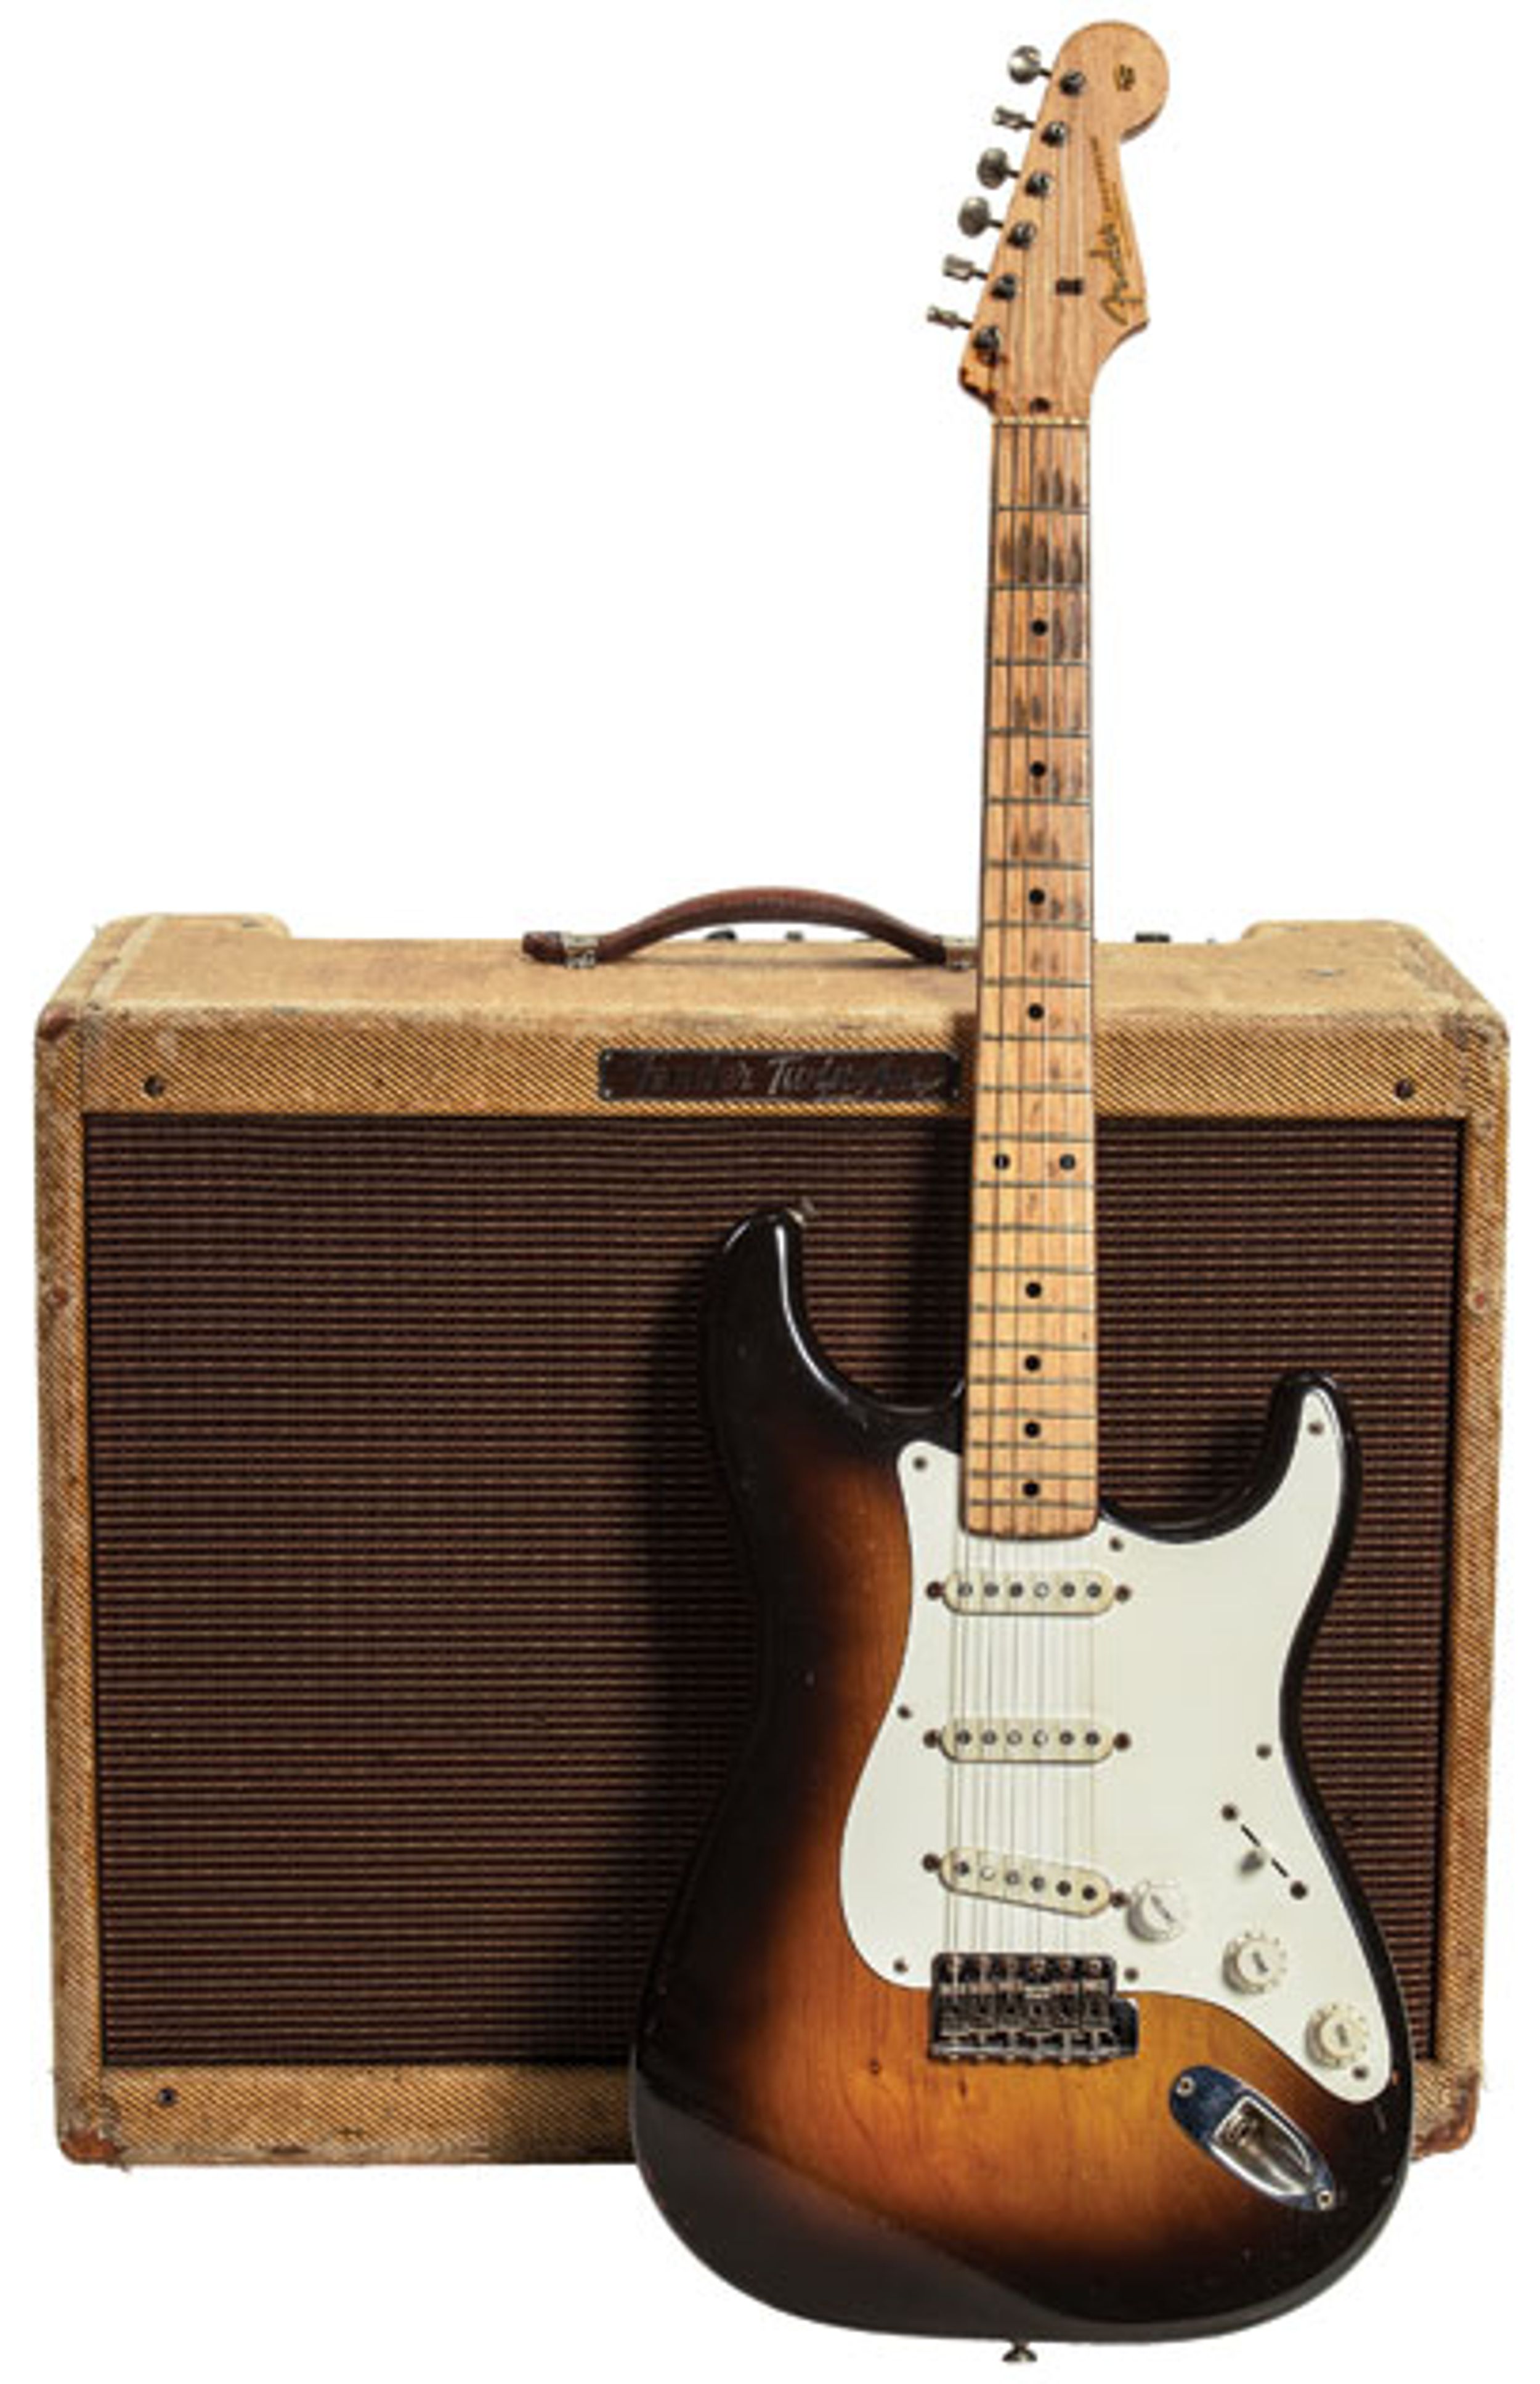 Vintage Vault: 1956 Fender Stratocaster (Serial #14220) and 1957 Fender Twin